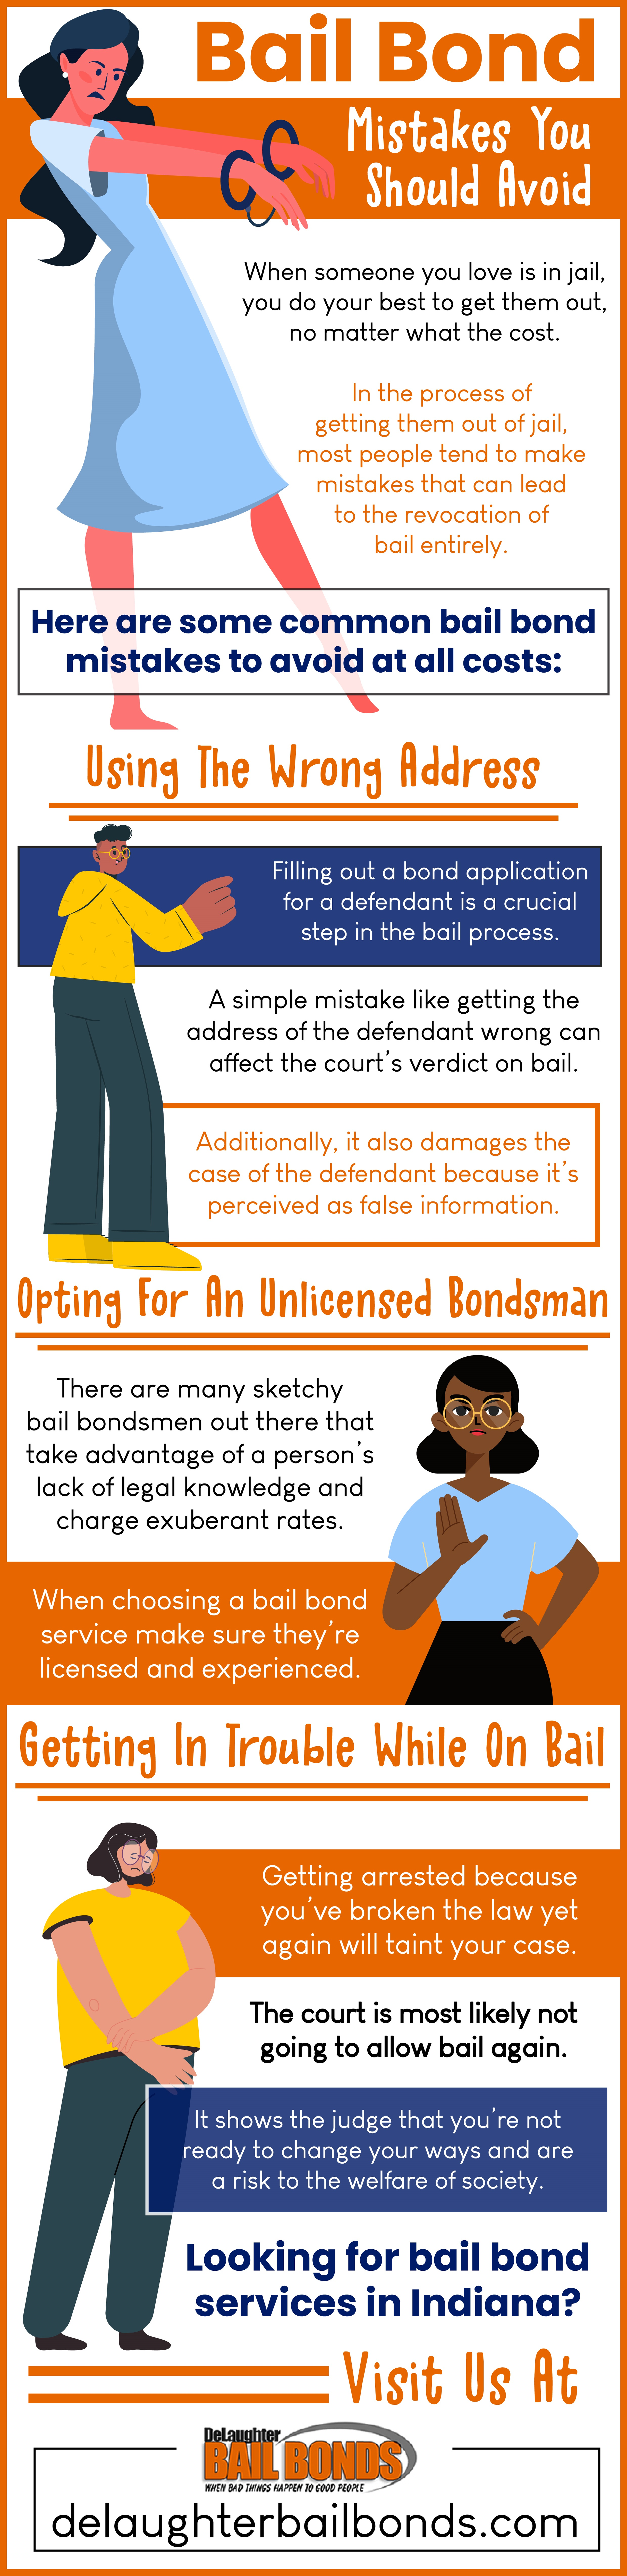 Bail Bonds - Mistakes You Should Avoid